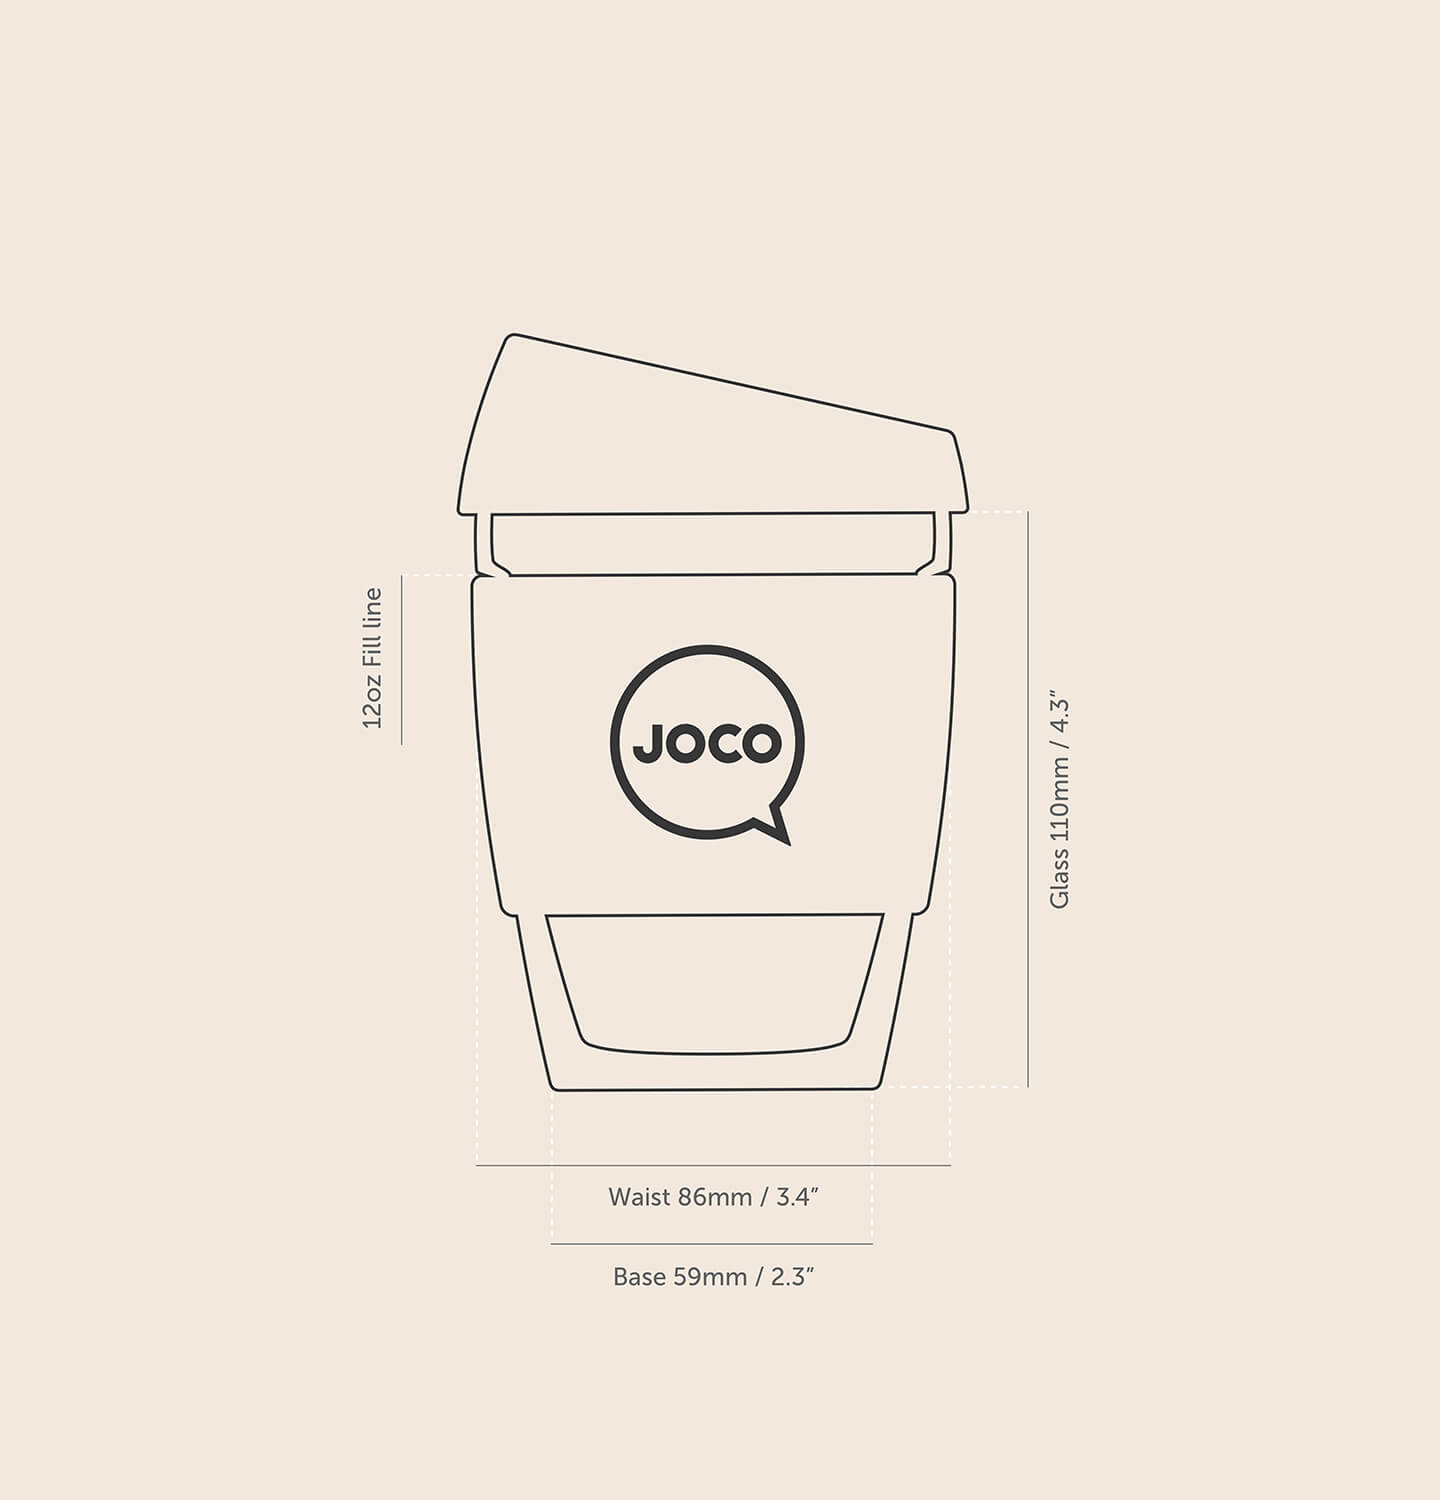 JOCO Glass Reusable Coffee Cup Amberlight, 6 oz